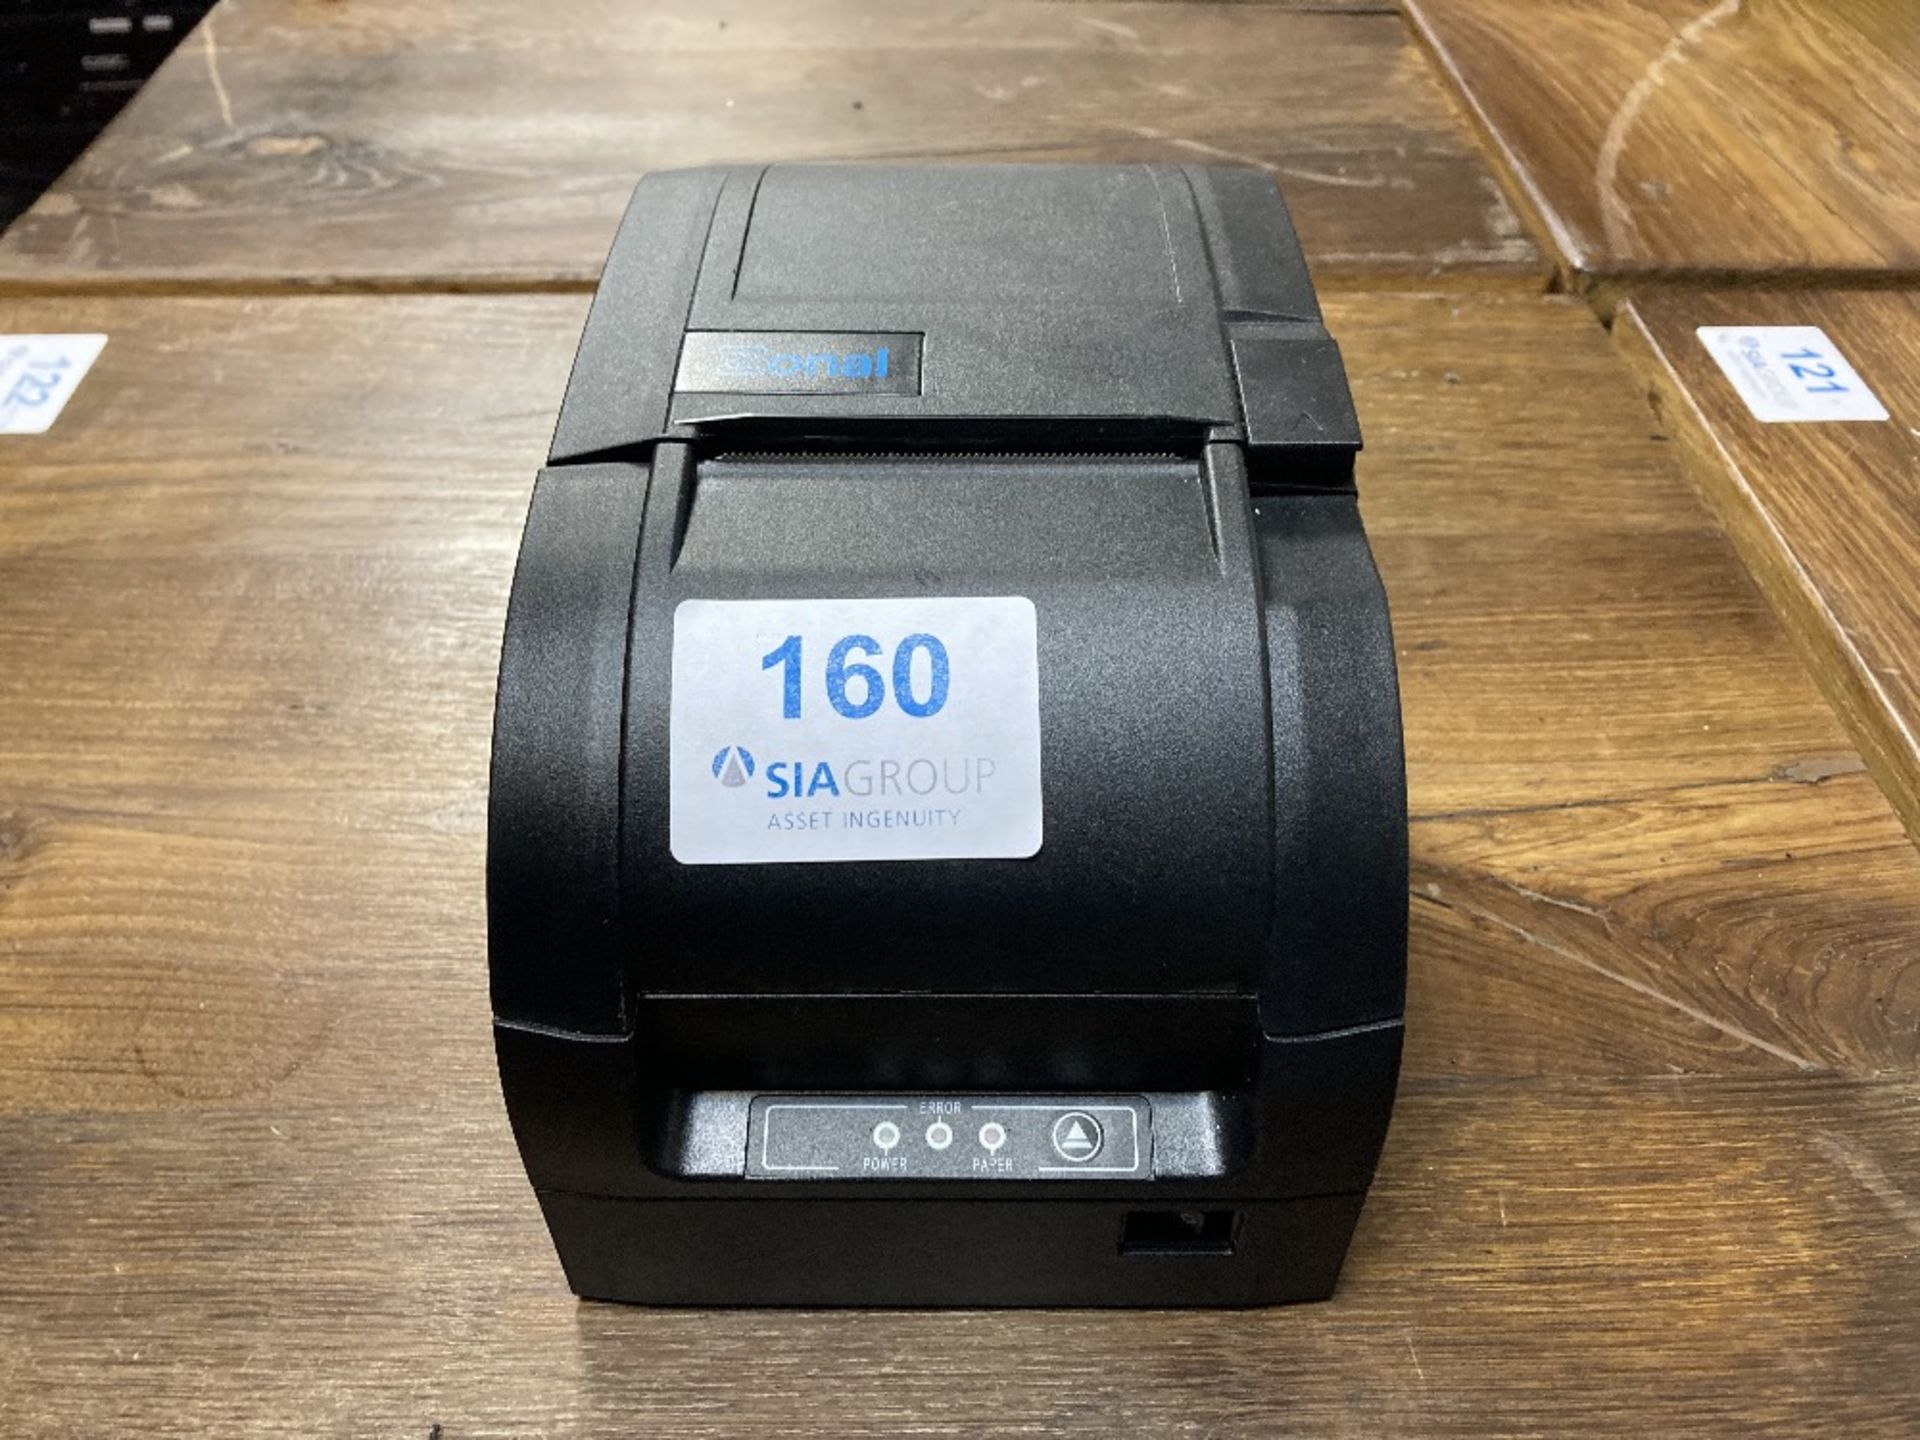 Zonal SNBC BTP-M300 POS Receipt Printer